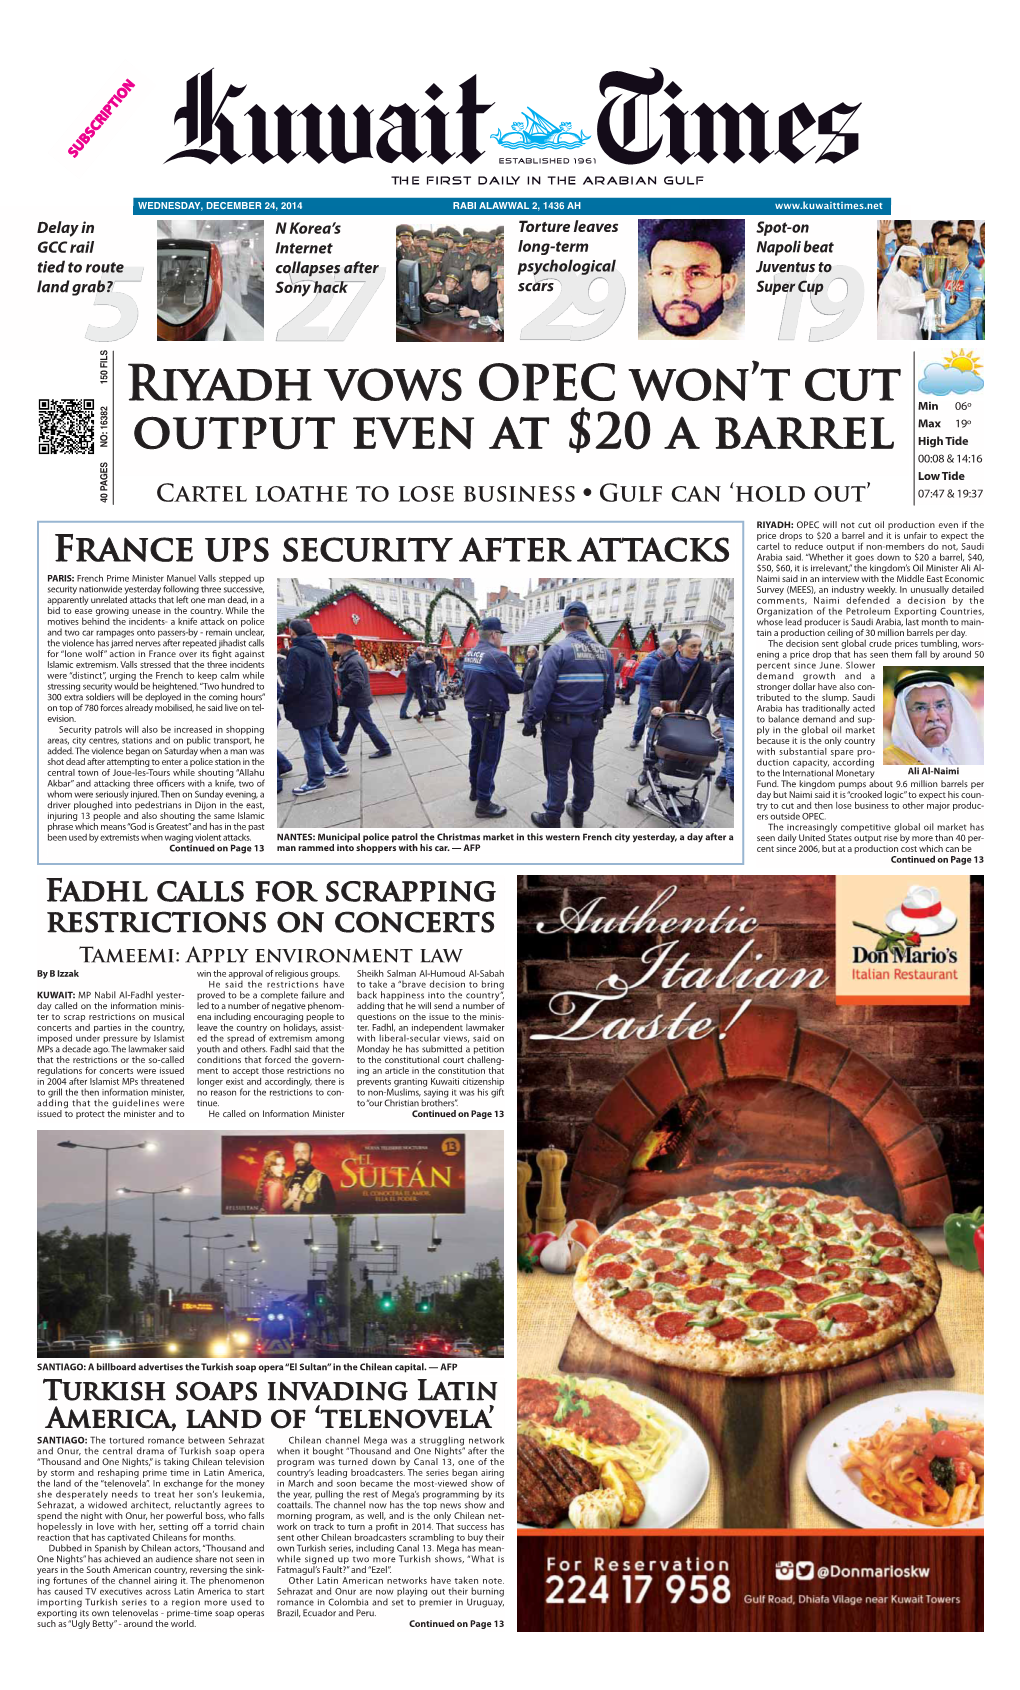 Riyadh Vows OPEC Won't Cut Output Even at $20 a Barrel